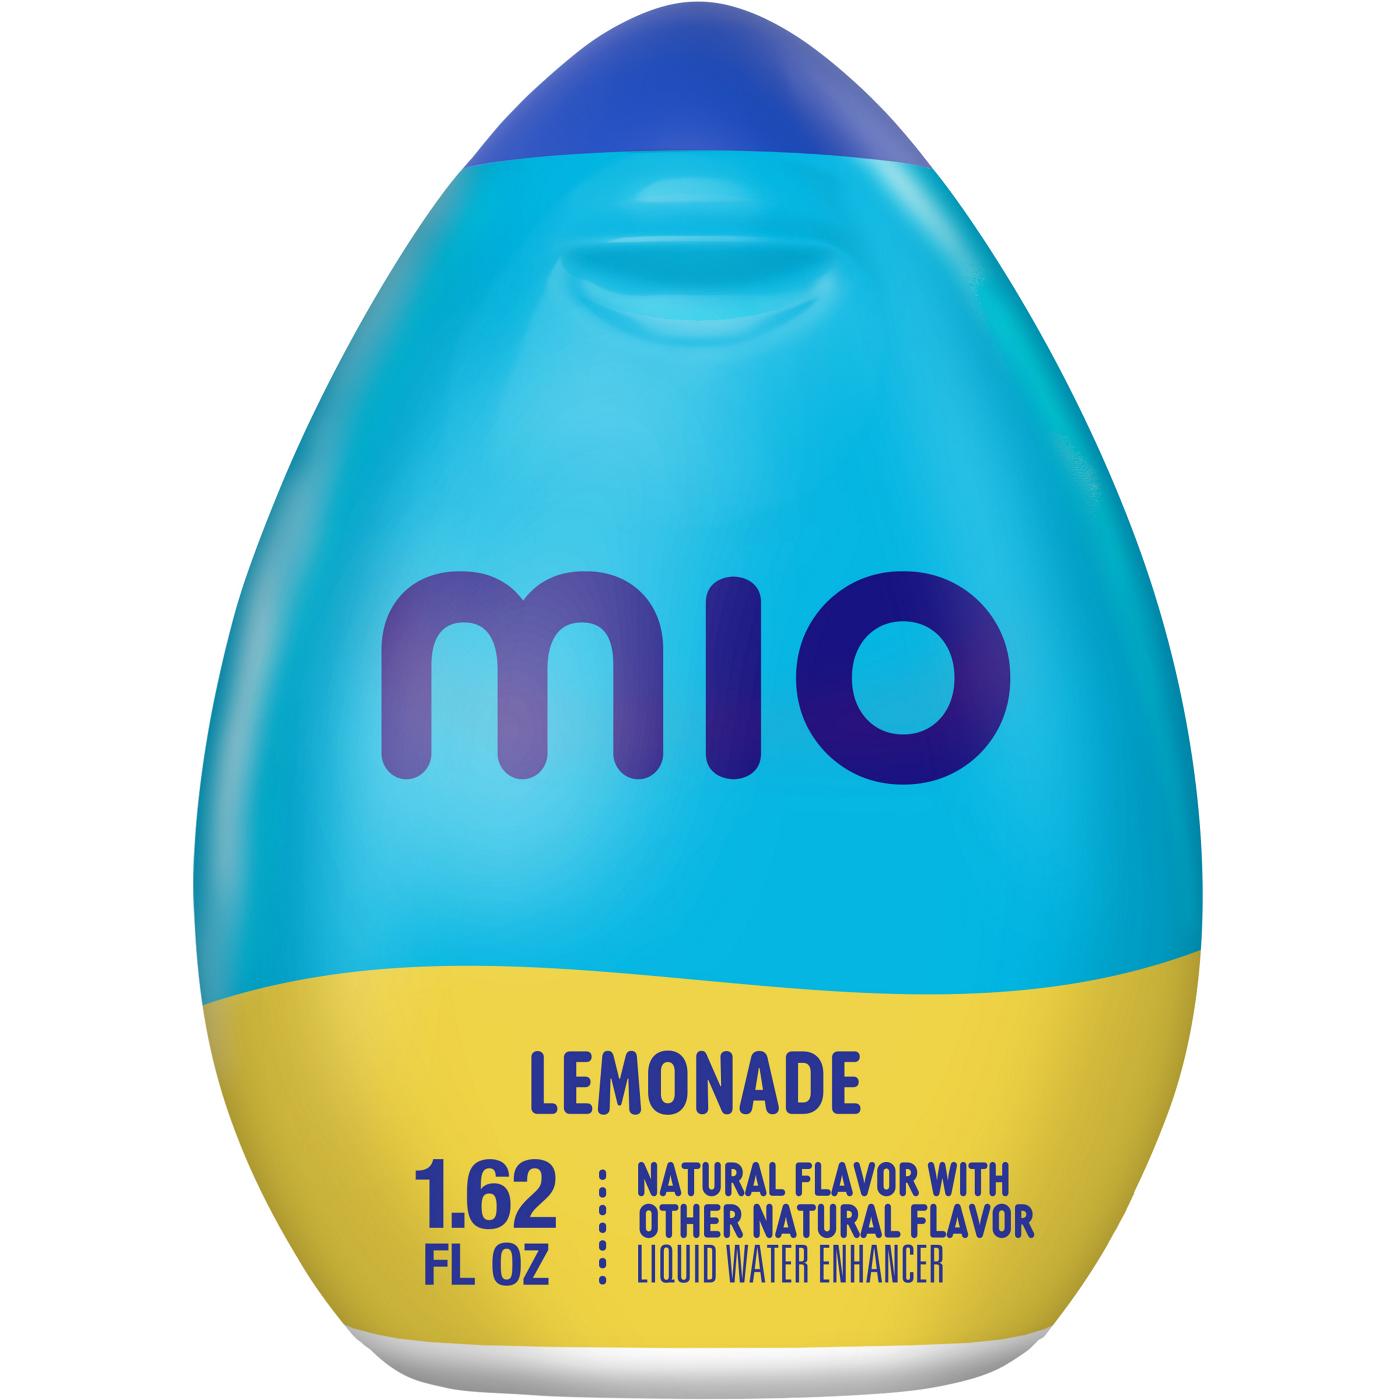 Mio Lemonade Liquid Water Enhancer; image 1 of 2